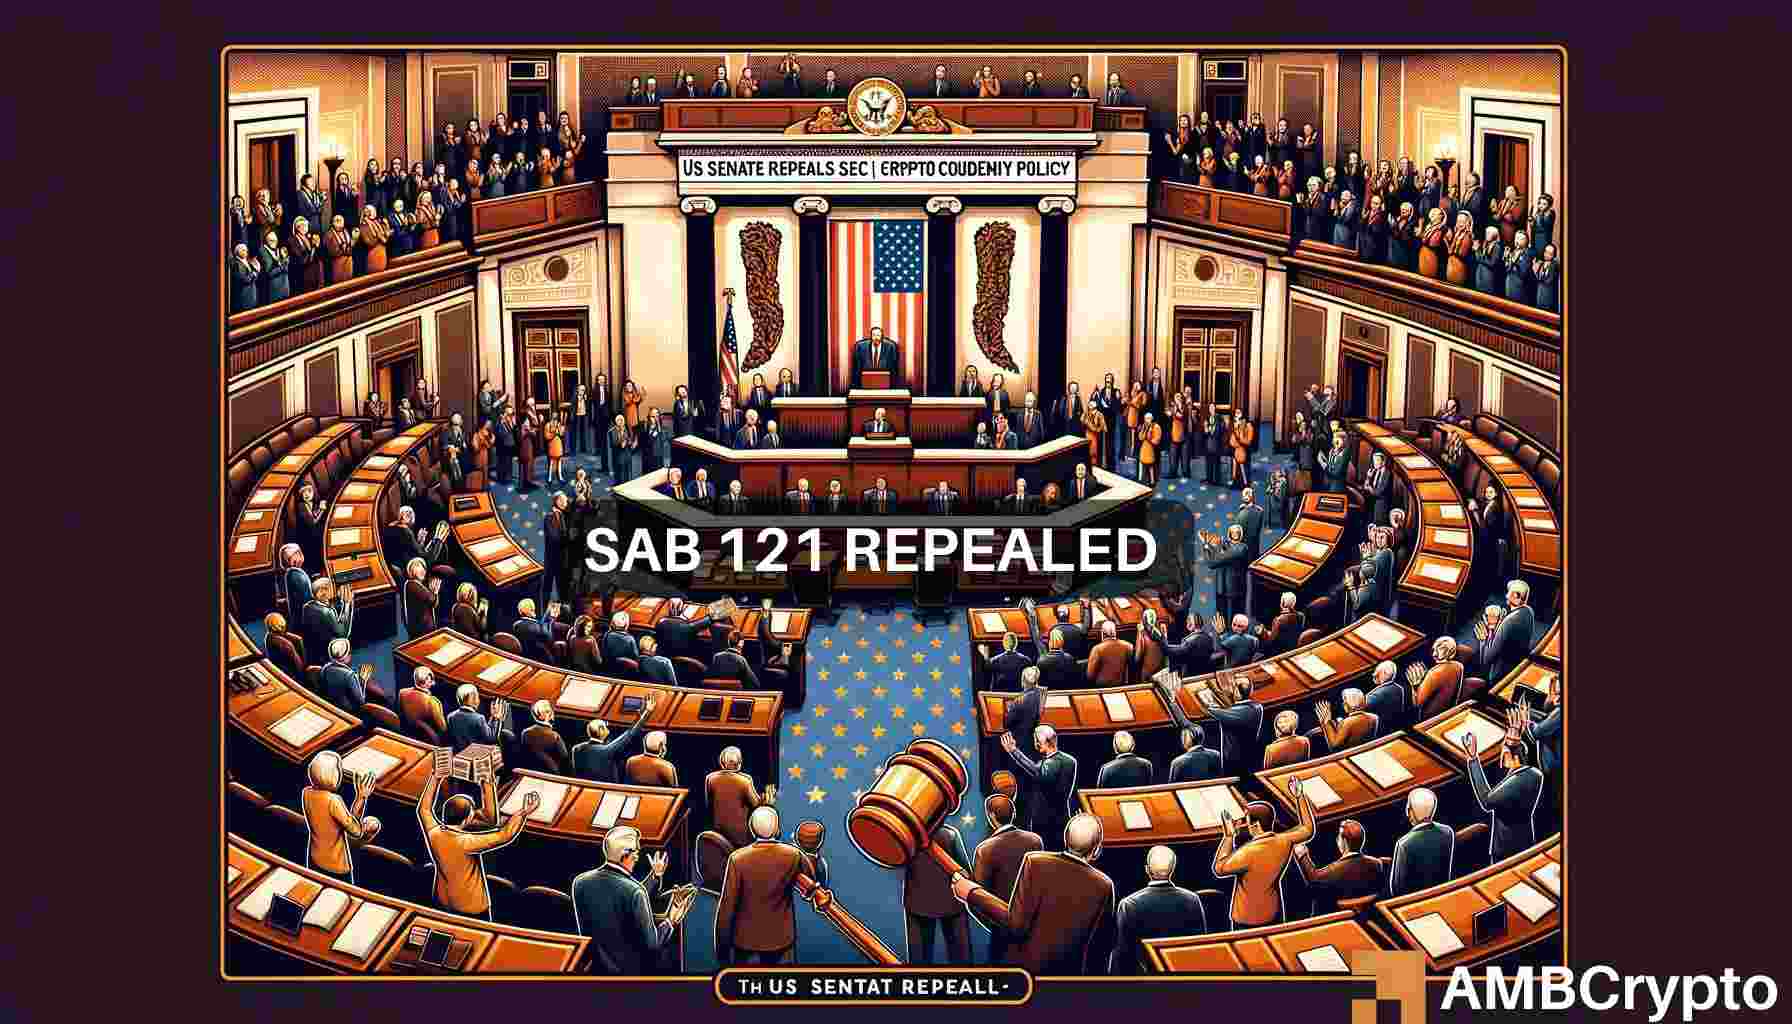 U.S Senate votes to repeal SEC’s crypto custody policy – SAB 121 – but…